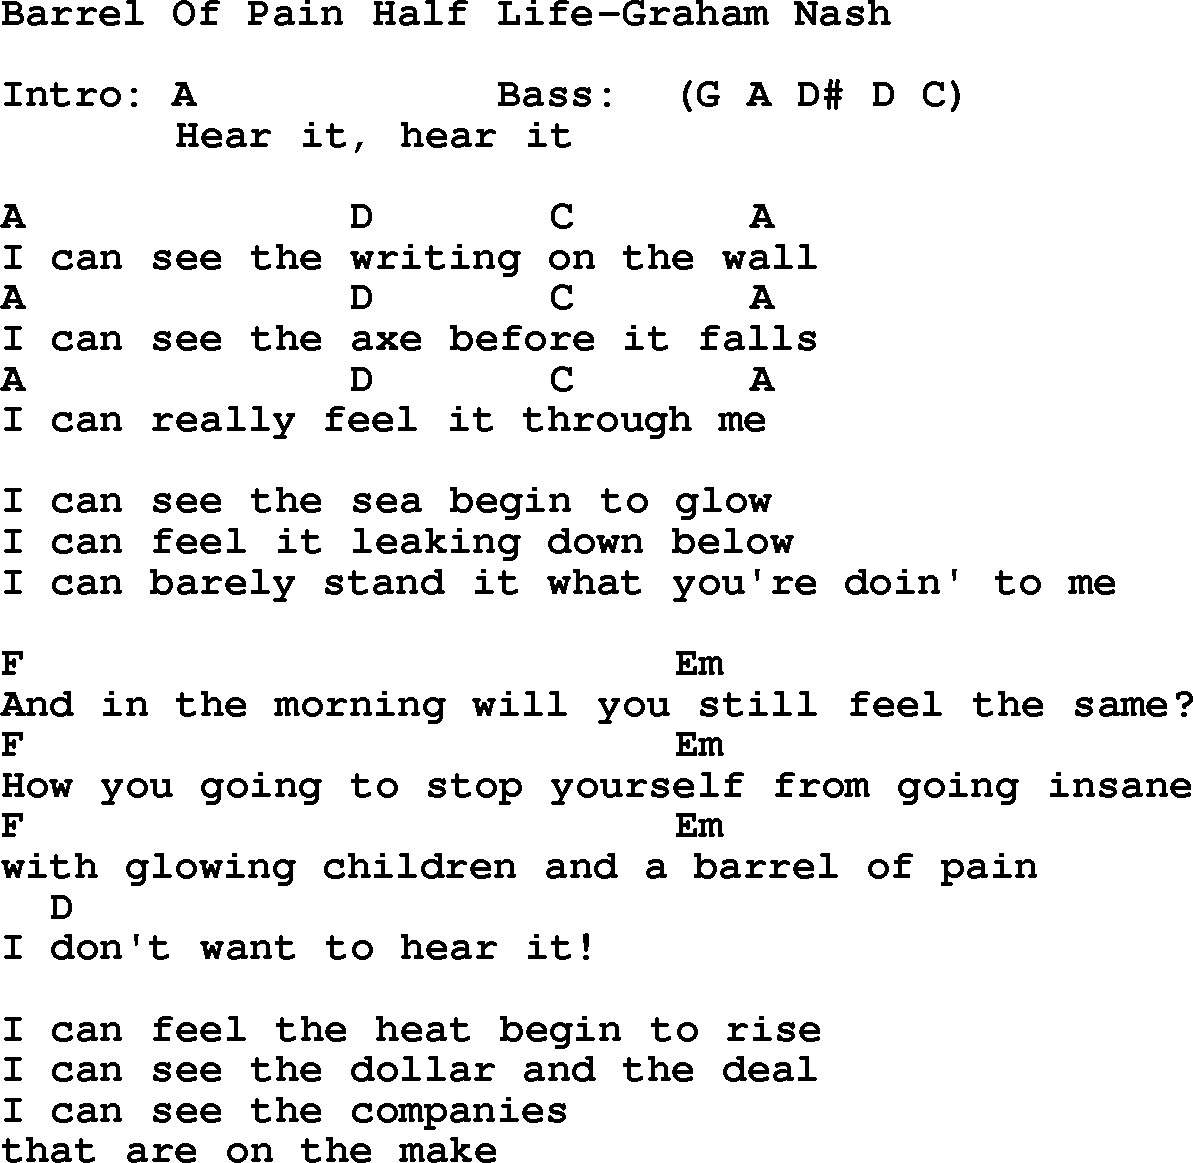 Protest Song Barrel Of Pain Half Life-Graham Nash lyrics and chords